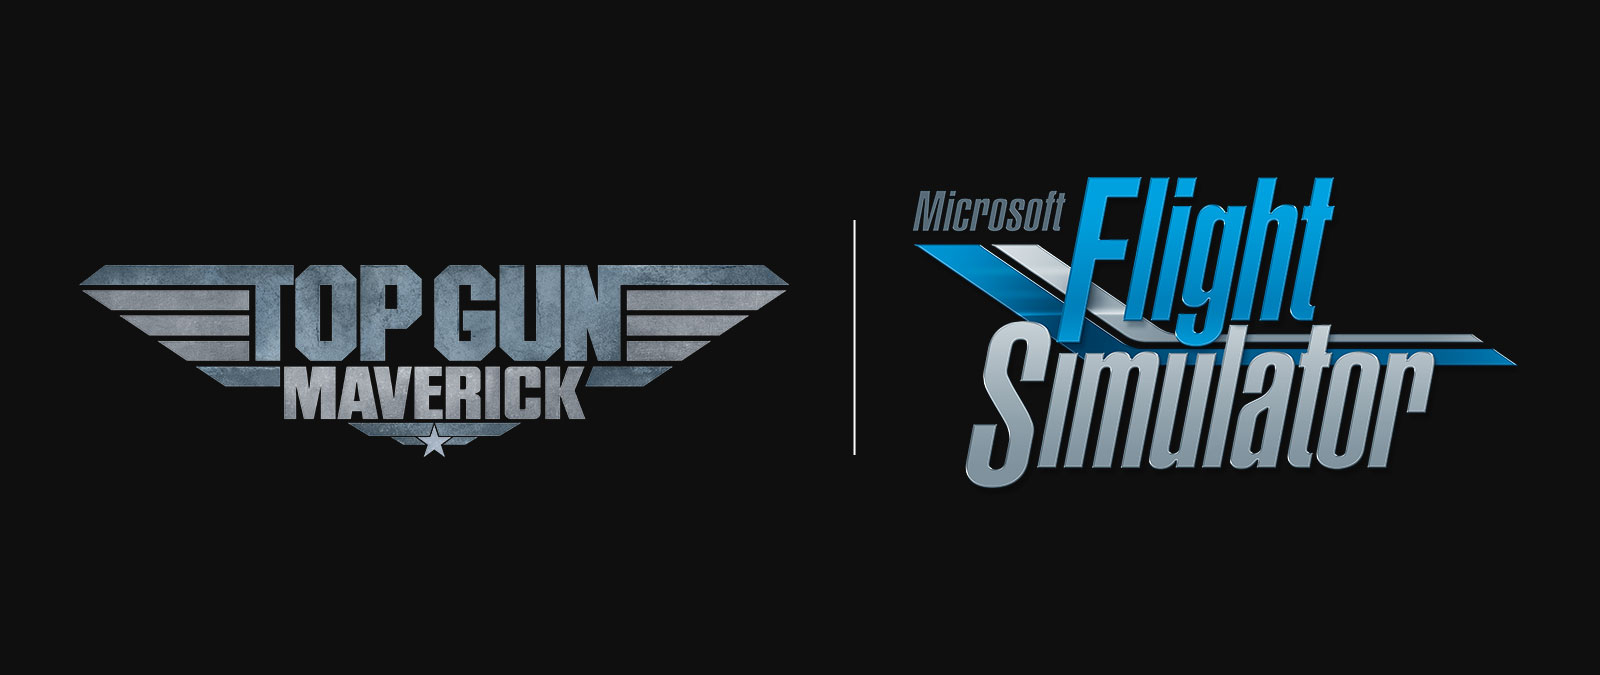 Microsoft Flight Simulator-Logo und Top Gun-Logo